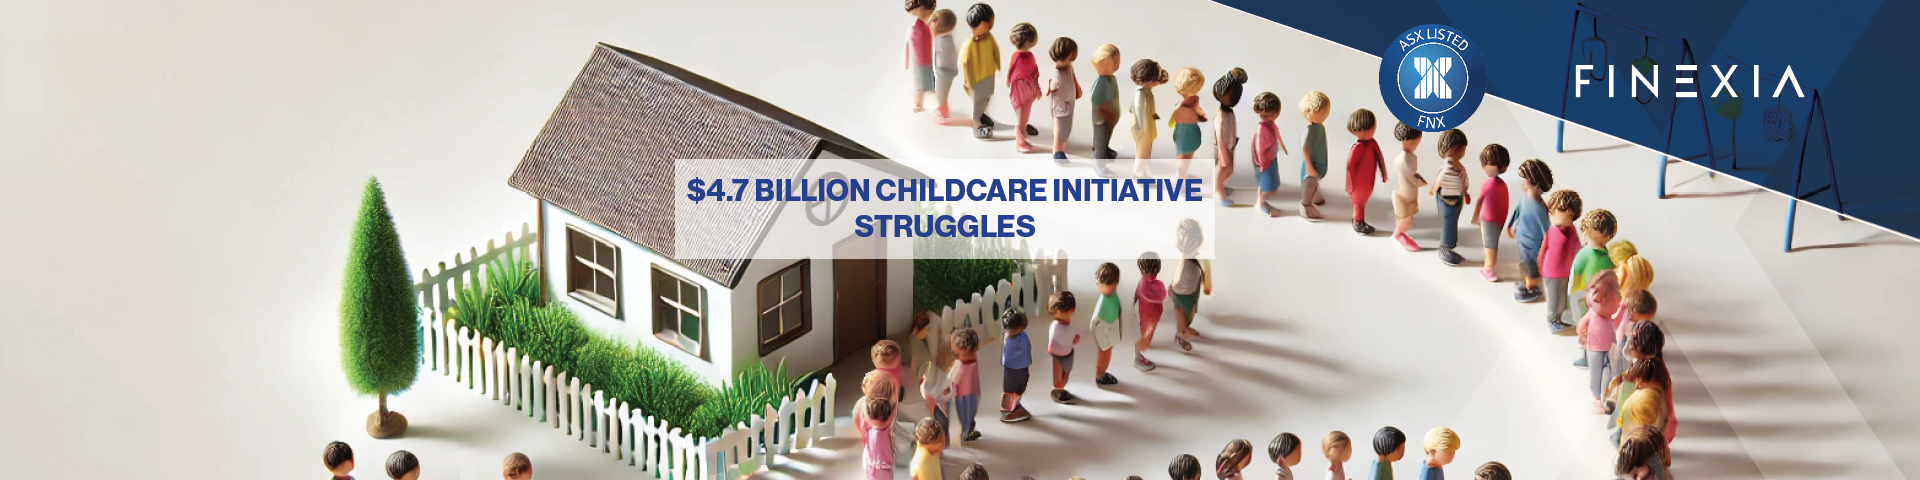 $4.7 Billion Childcare Initiative Struggles Amid Rising Construction Costs